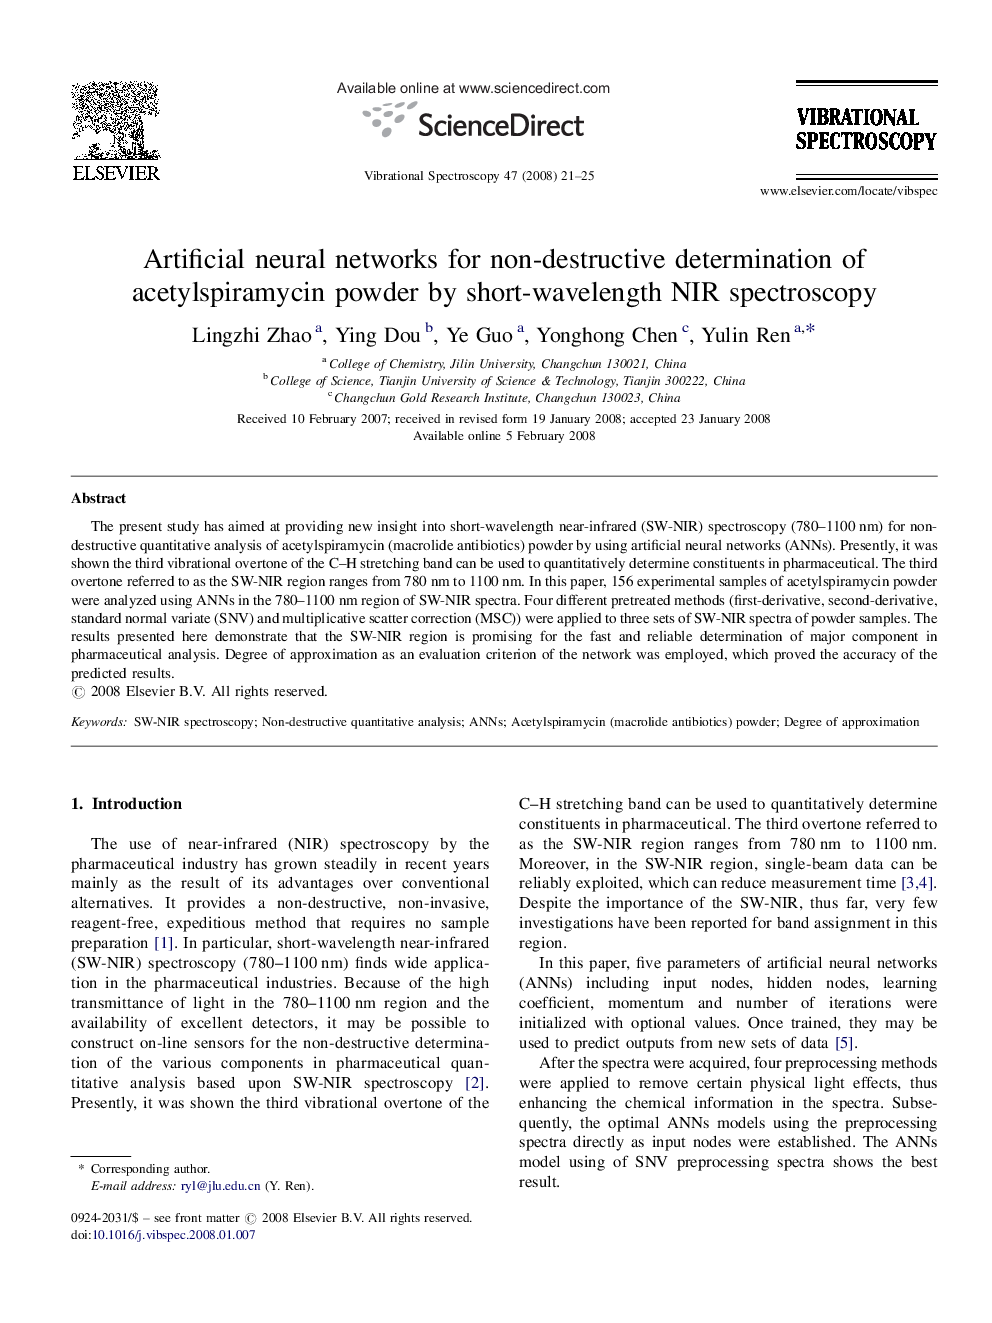 Artificial neural networks for non-destructive determination of acetylspiramycin powder by short-wavelength NIR spectroscopy